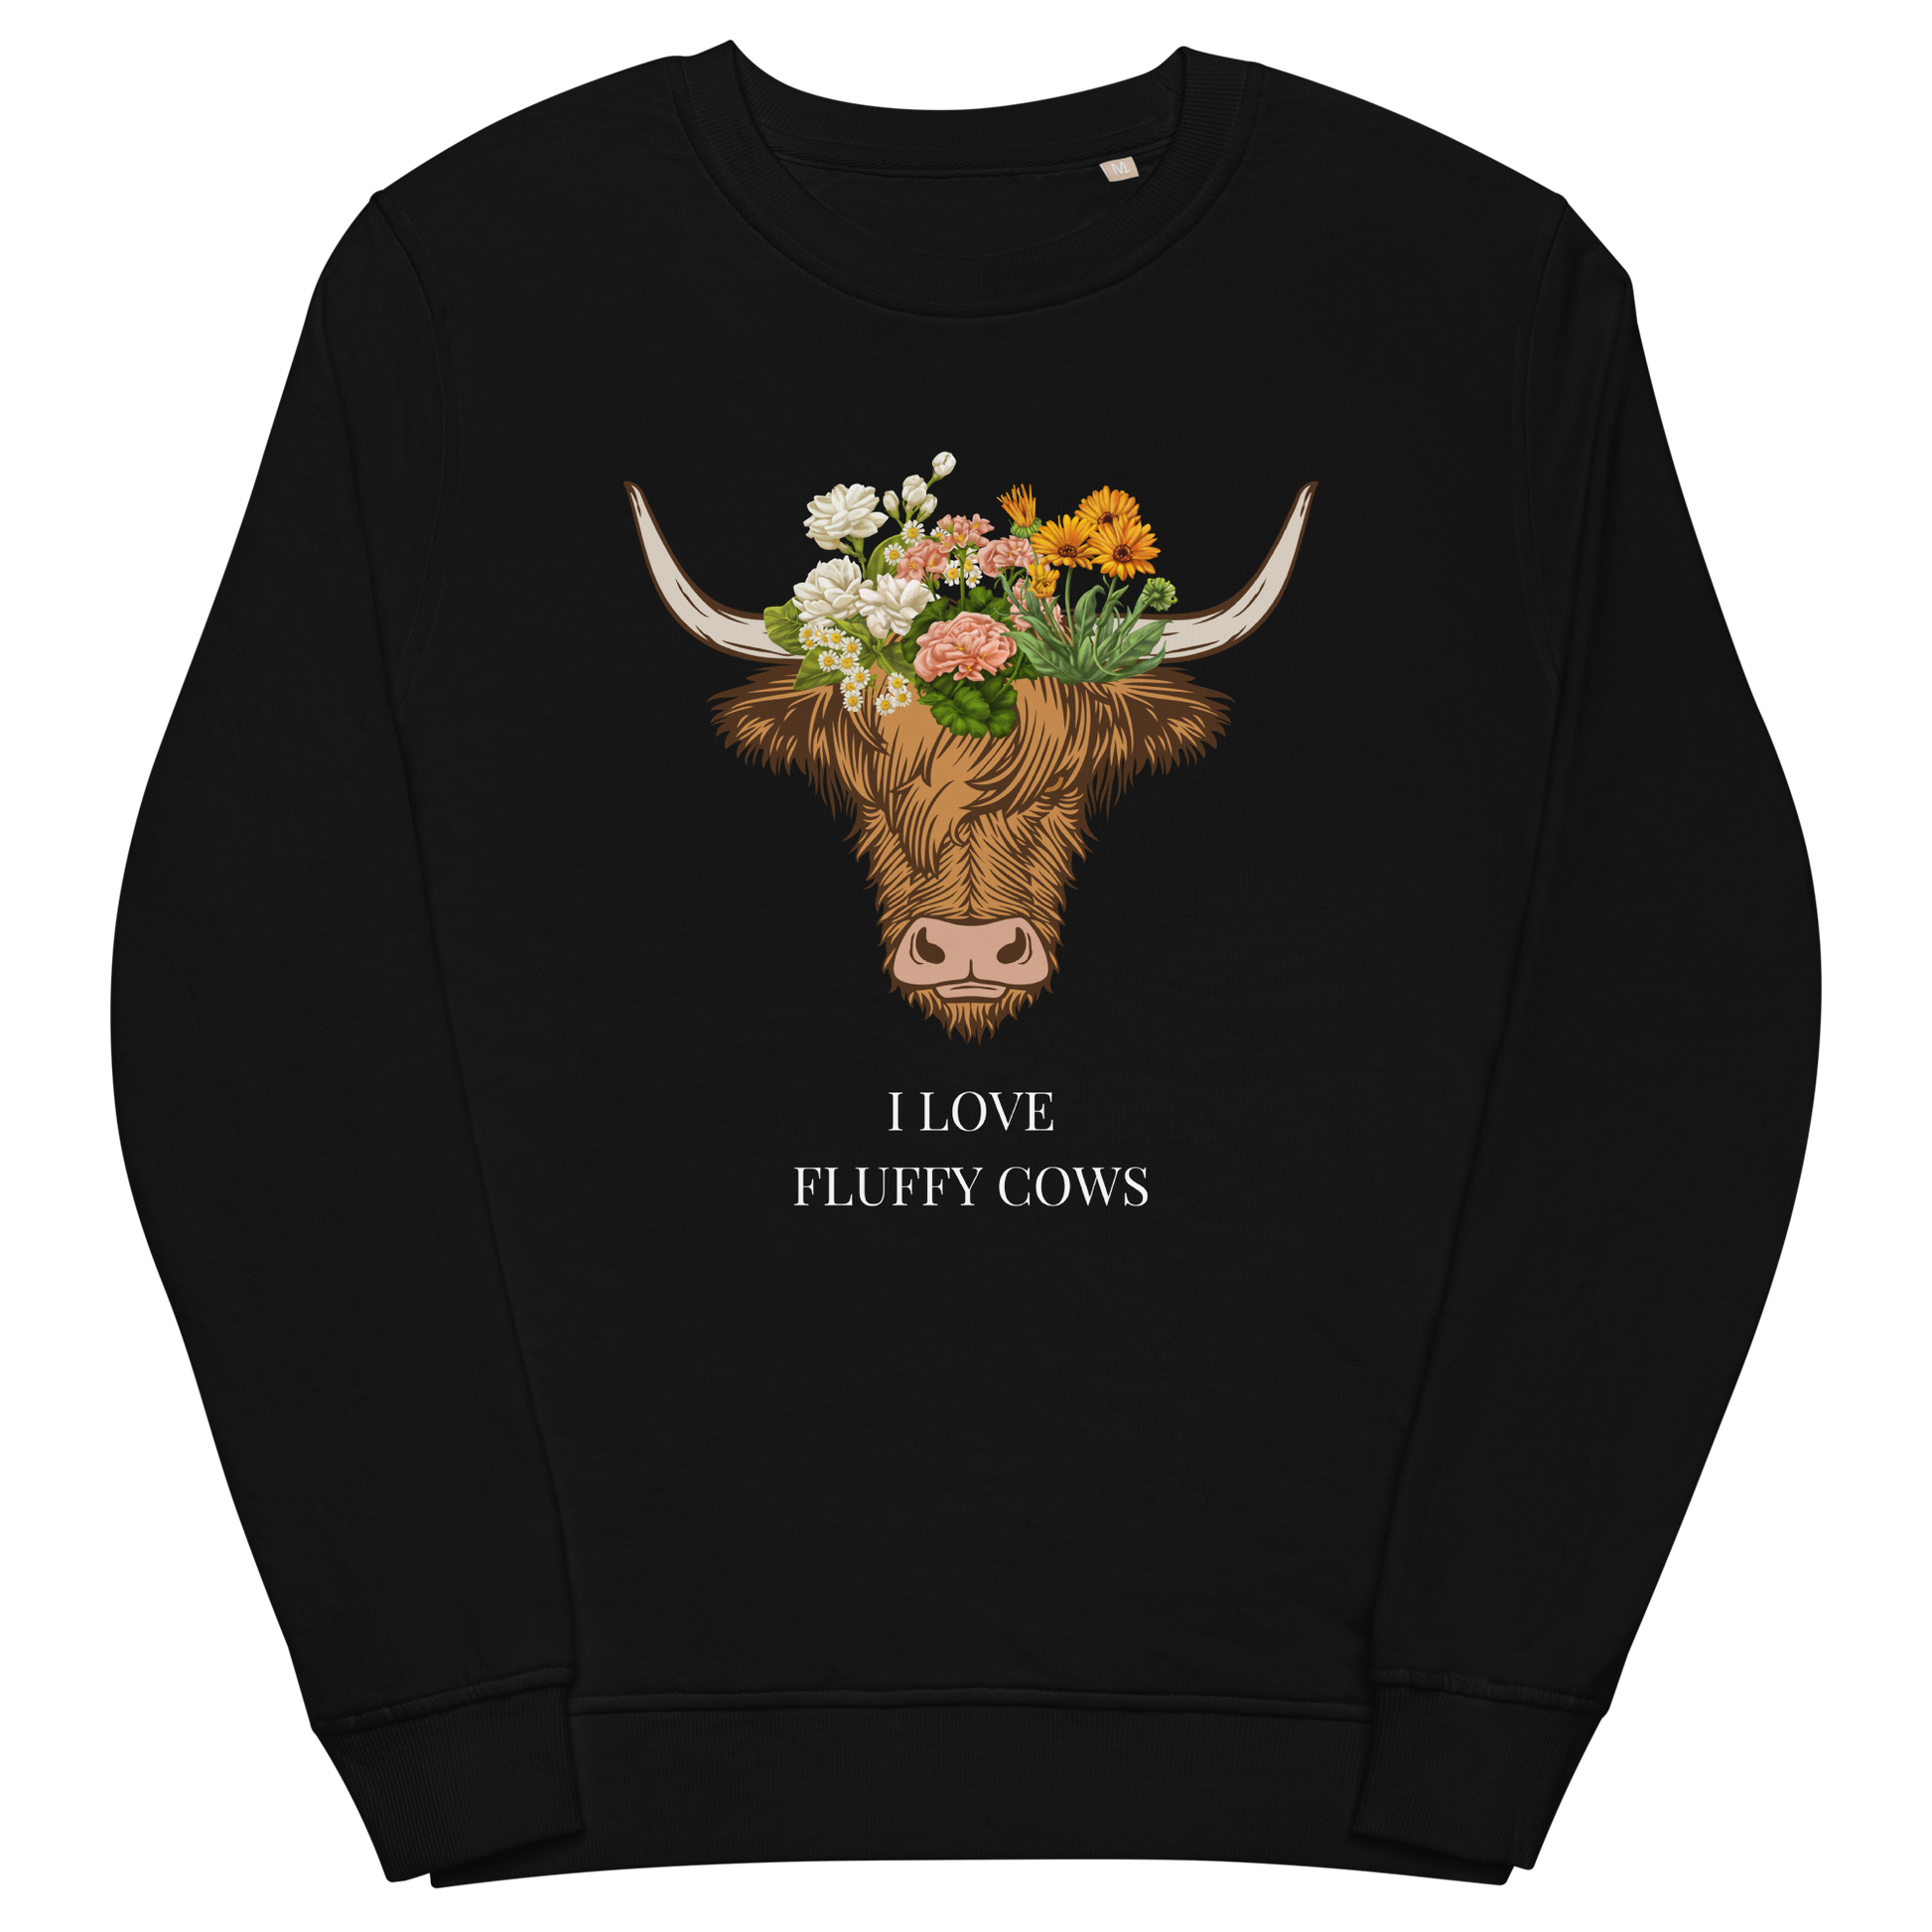 Black Organic Cotton Highland Cow Sweatshirt featuring an adorable I Love Fluffy Cows graphic on the chest - Cute Graphic Highland Cow Sweatshirts - Boozy Fox